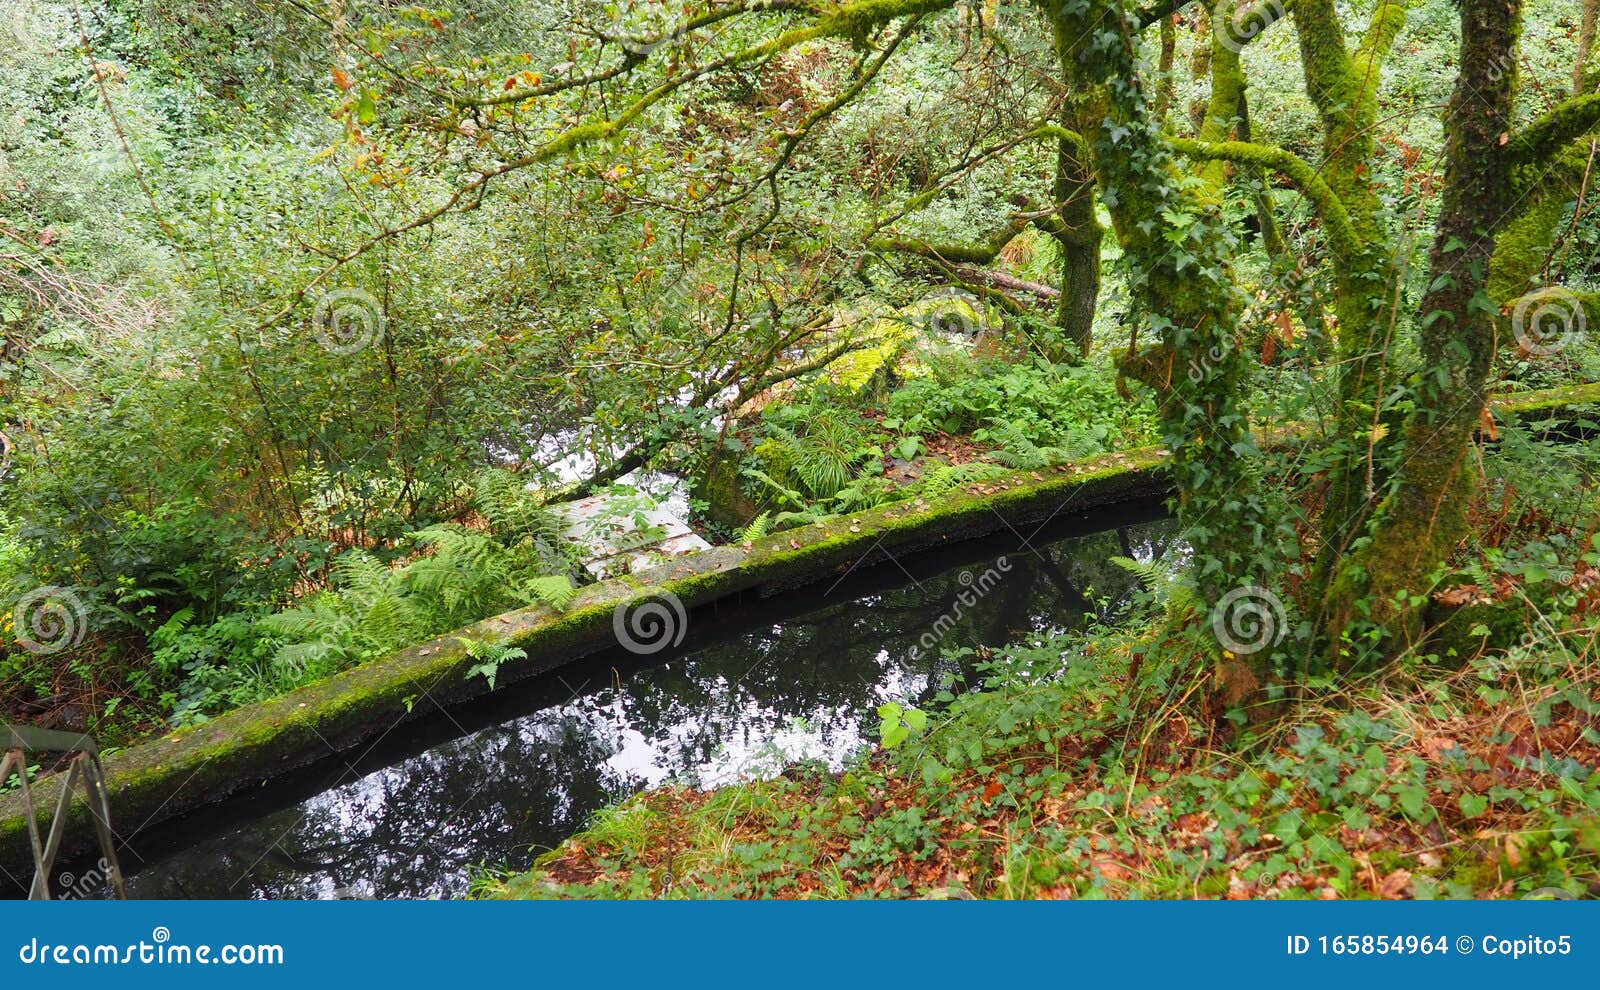 water channel in the natural park of silleda, pontevedra, spain, europe